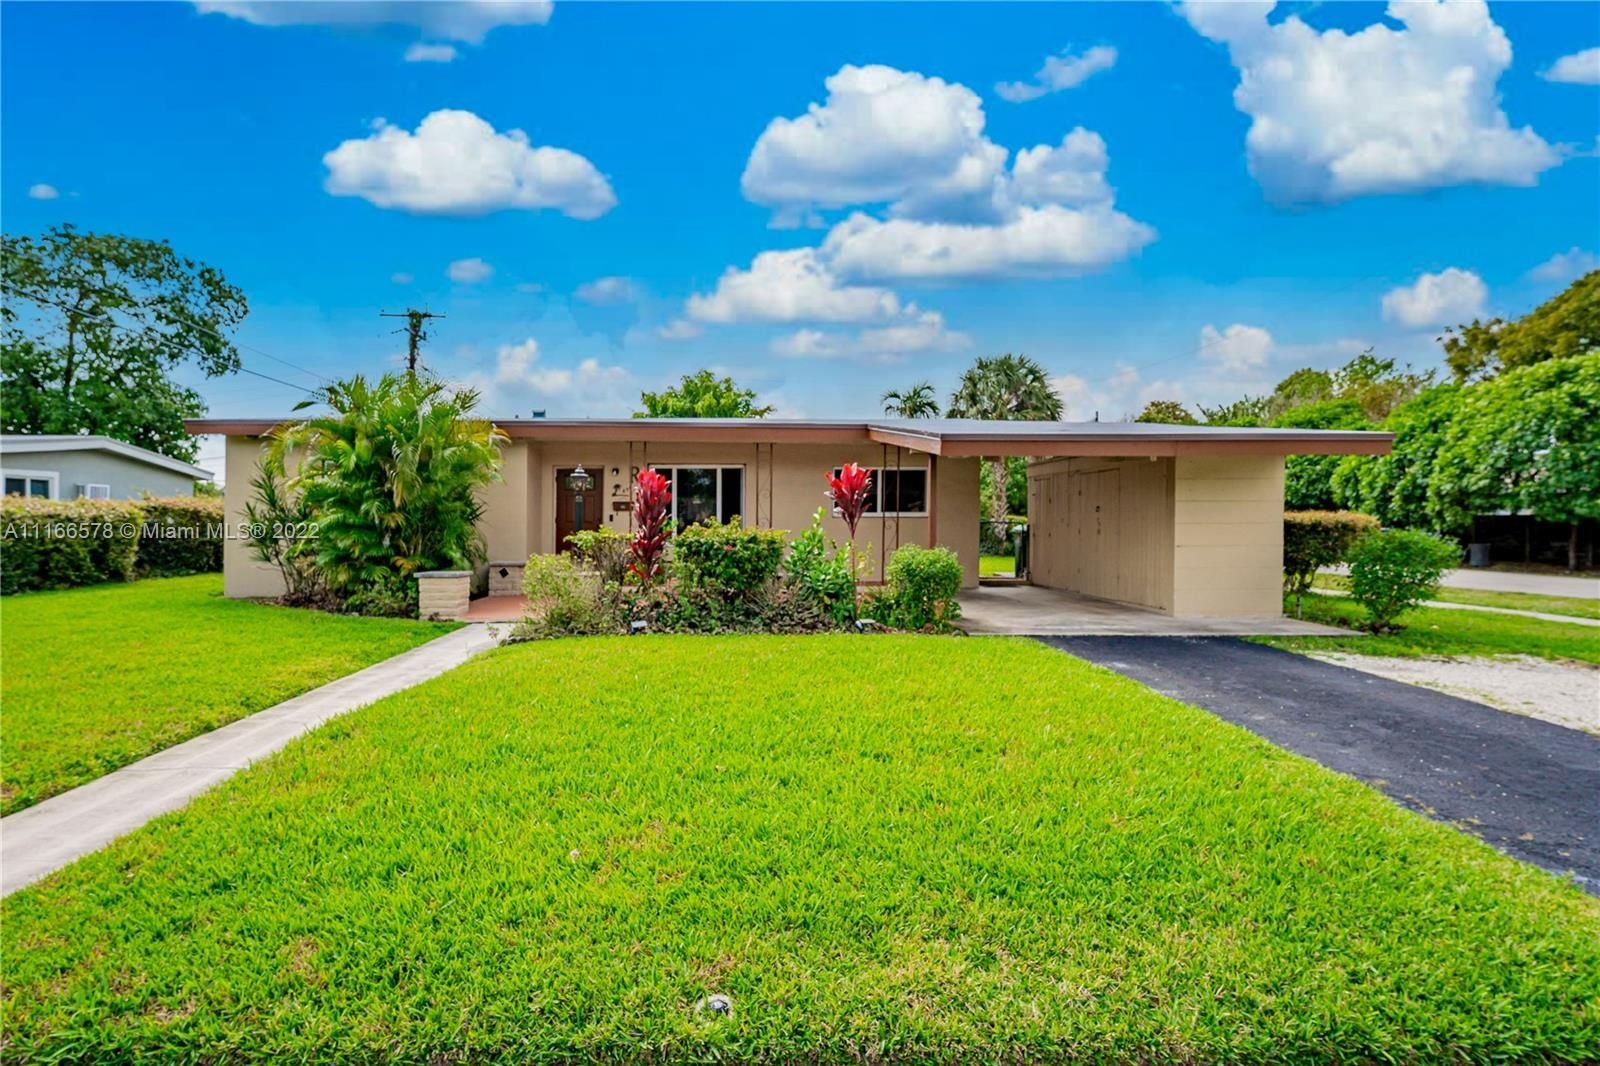 Real estate property located at 870 170th Ter, Miami-Dade County, Miami Gardens, FL